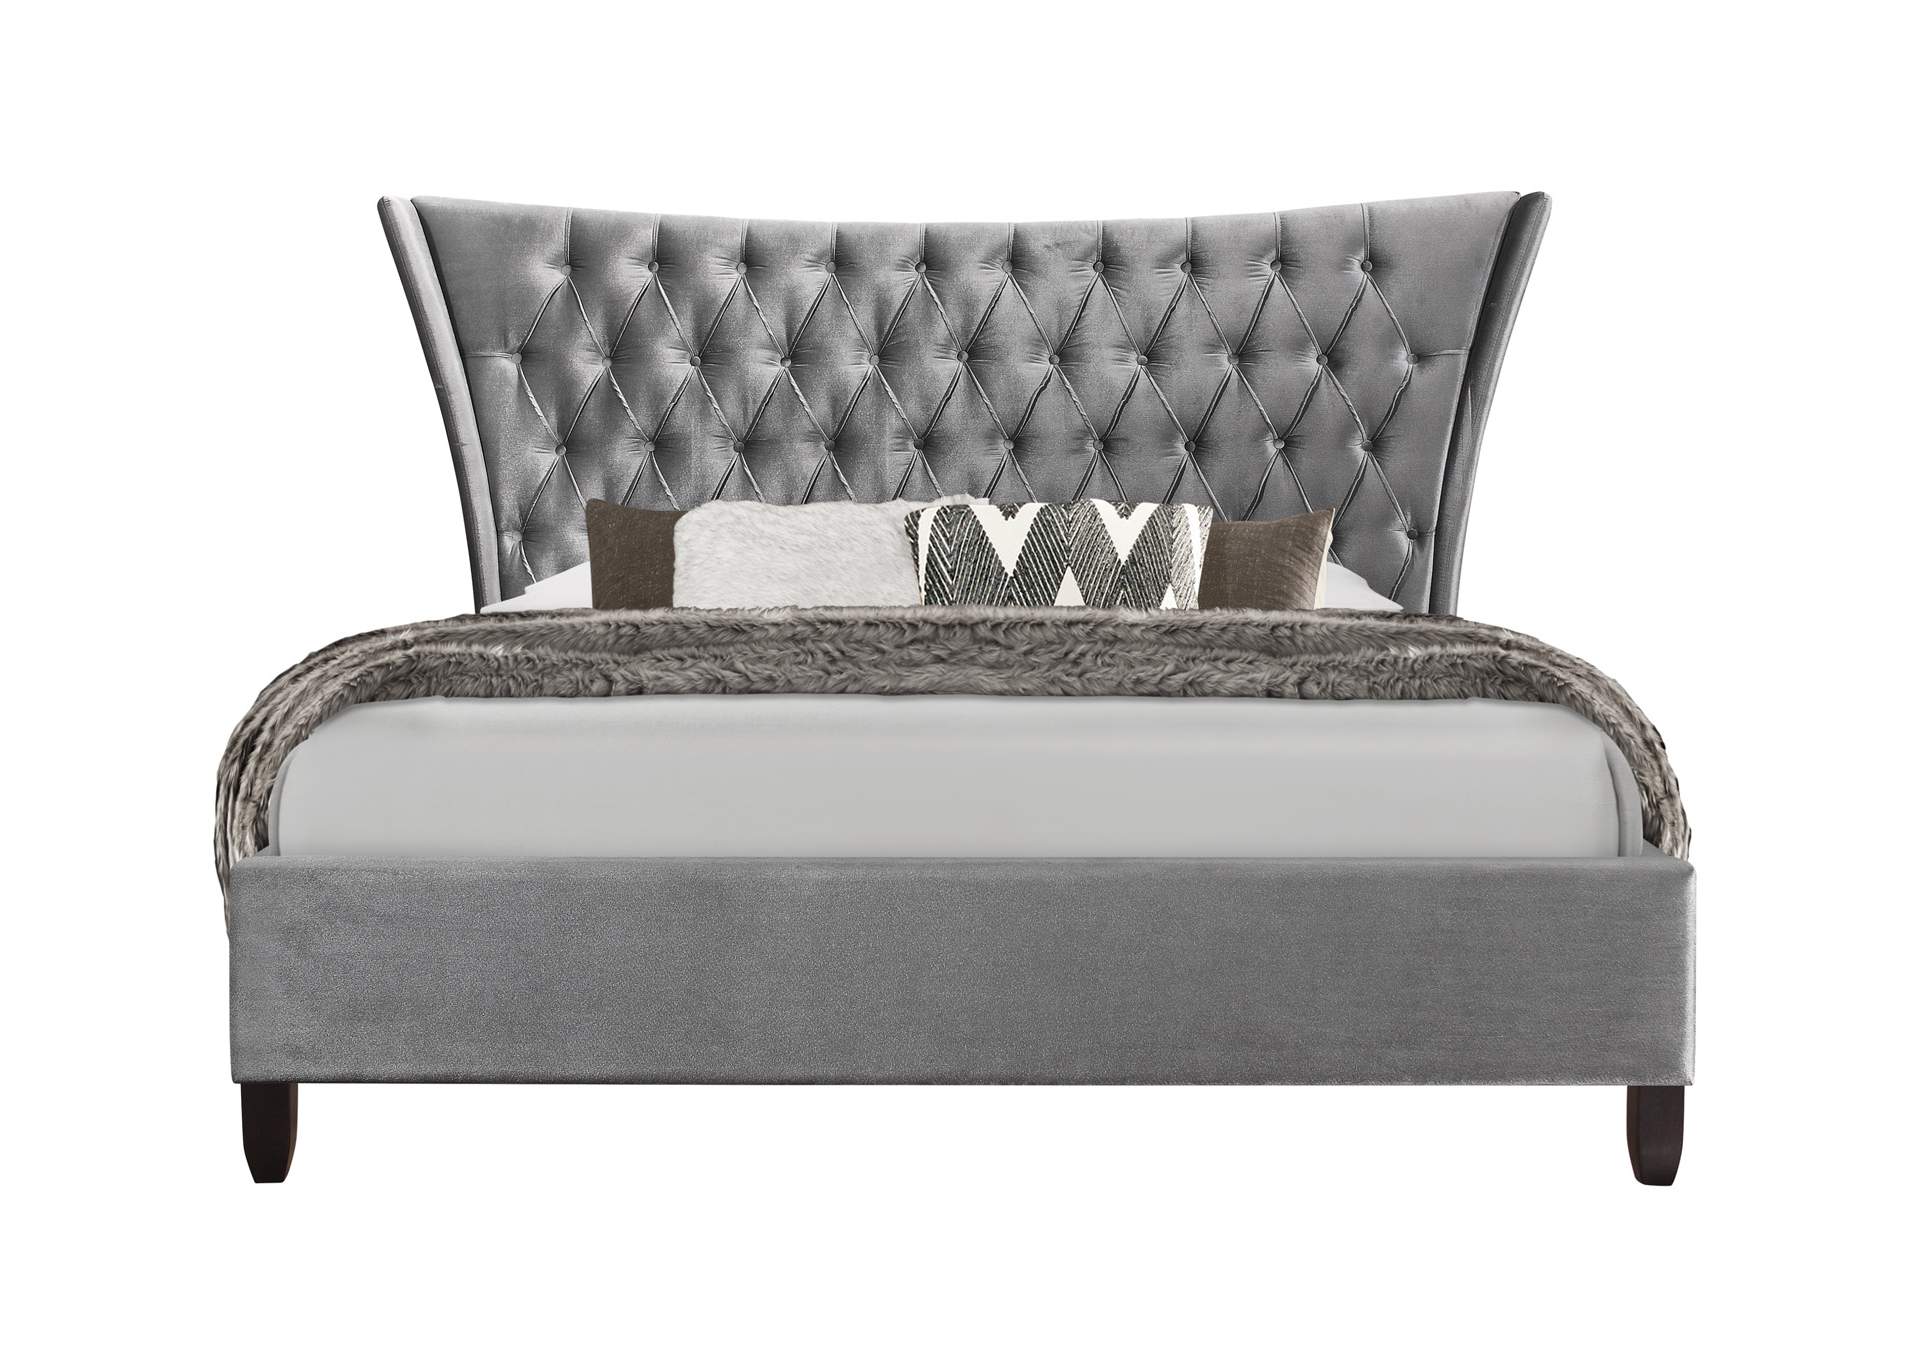 Silver King Bed,Global Furniture USA